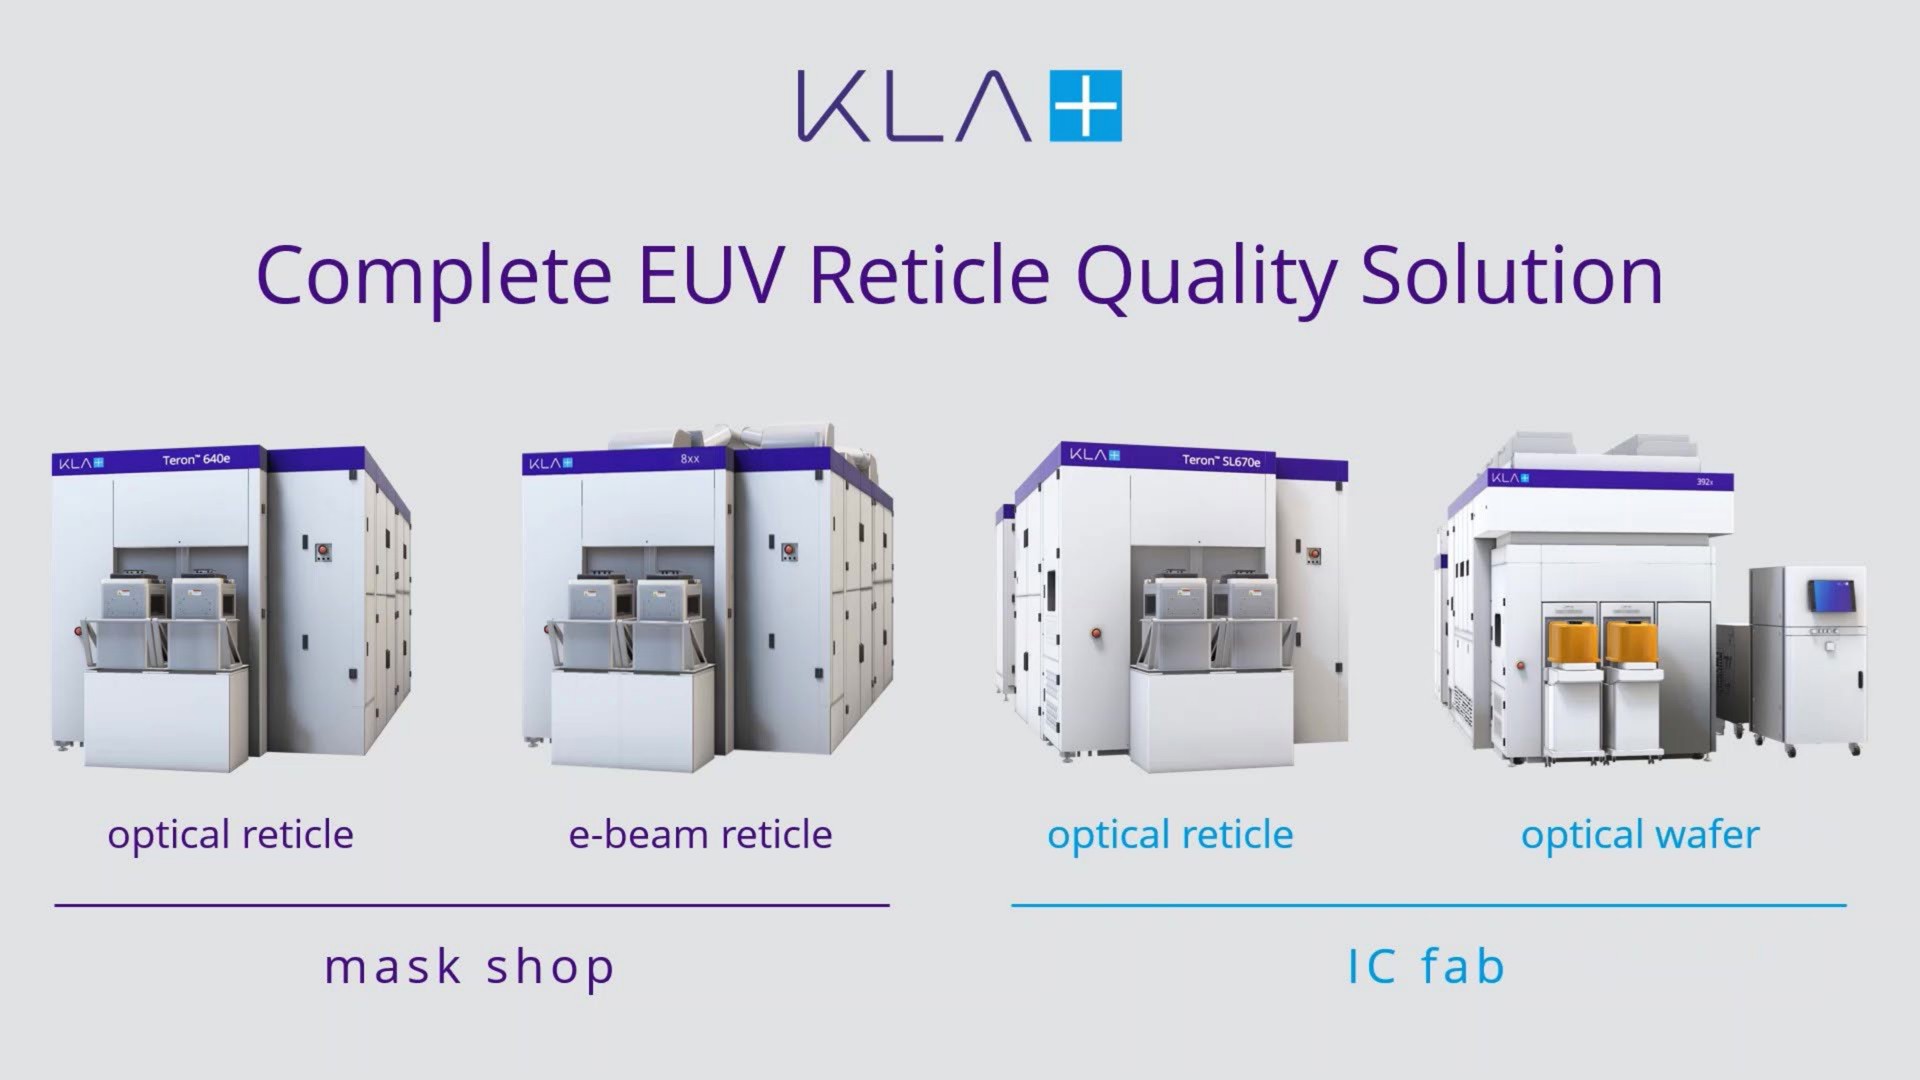 a complete reticle quality solution | KLA